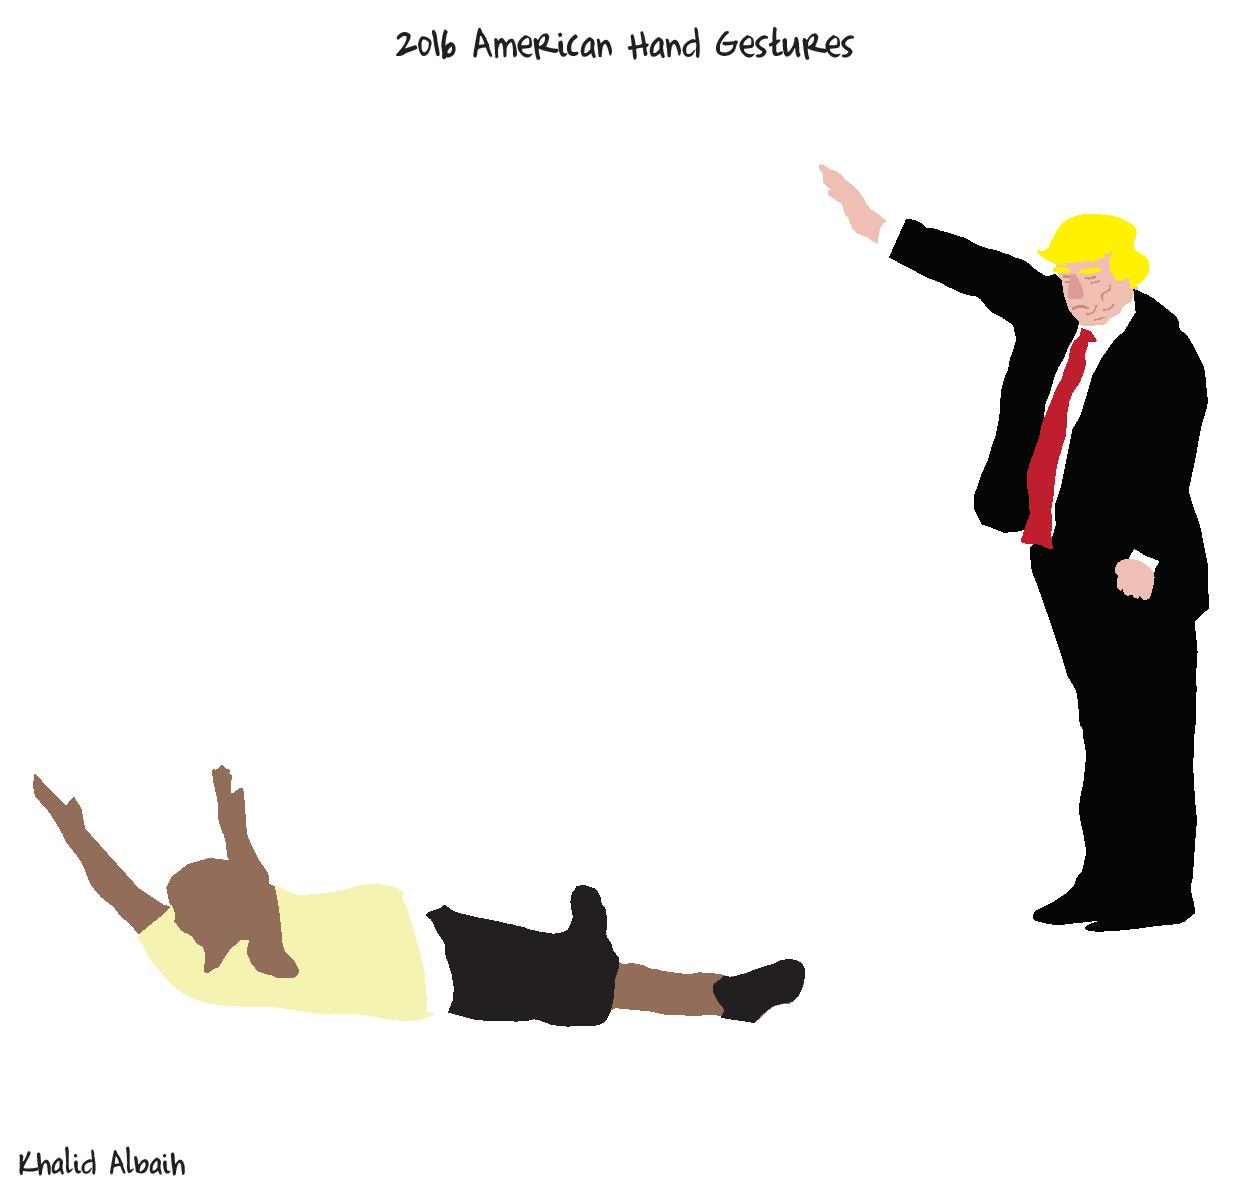 L’art de la satire de Khalid Albaih – The art of satire by Khalid Albaih